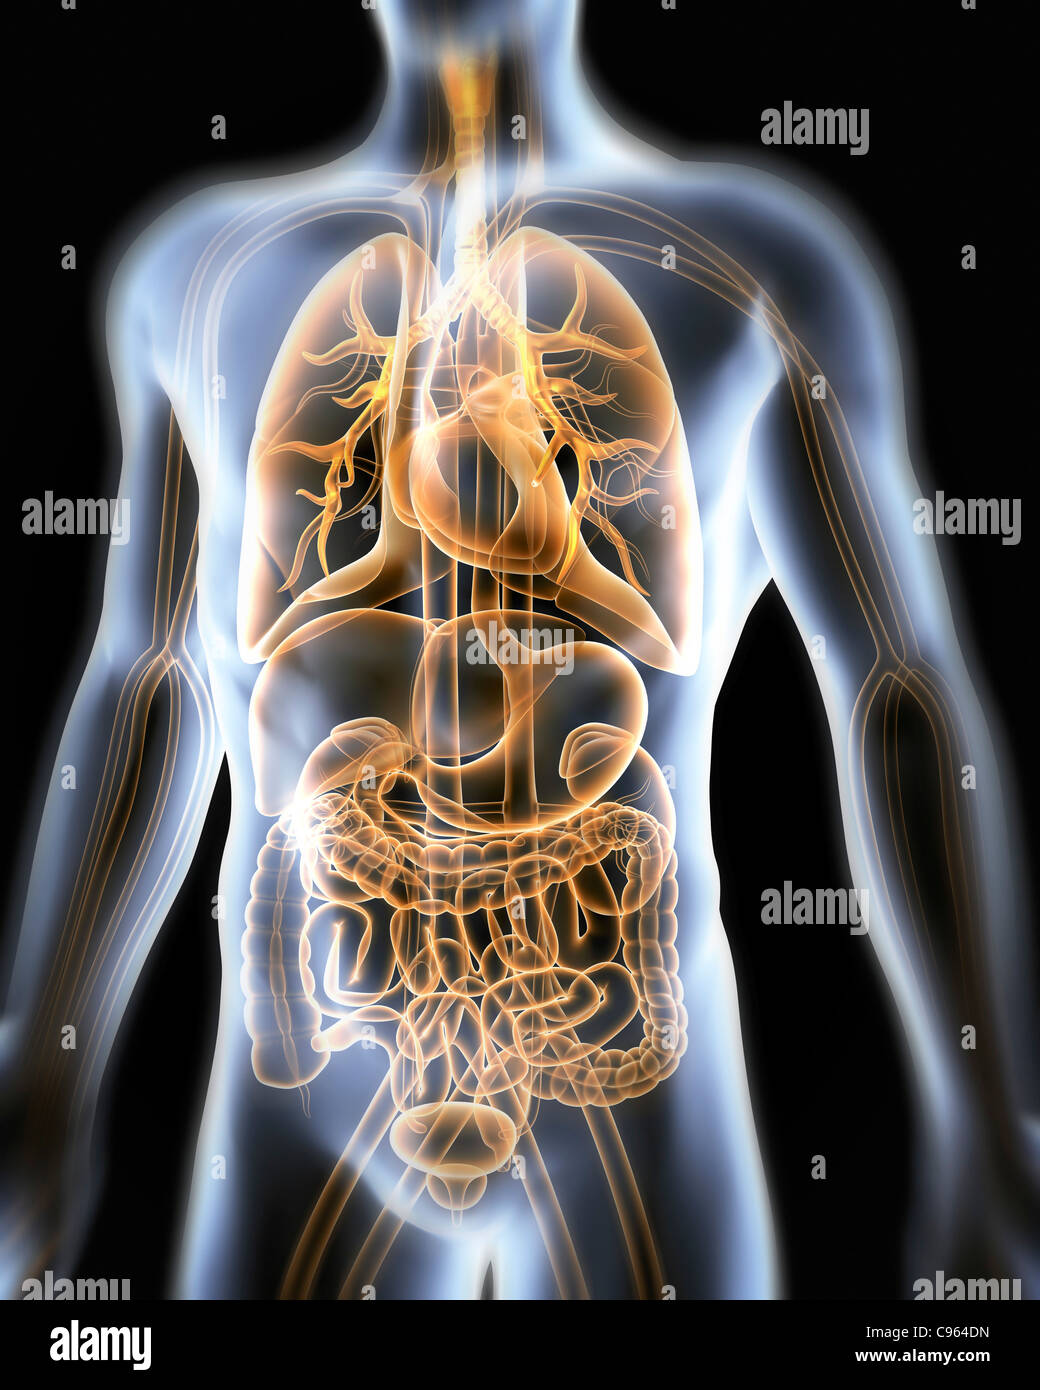 Human anatomy, artwork Stock Photo